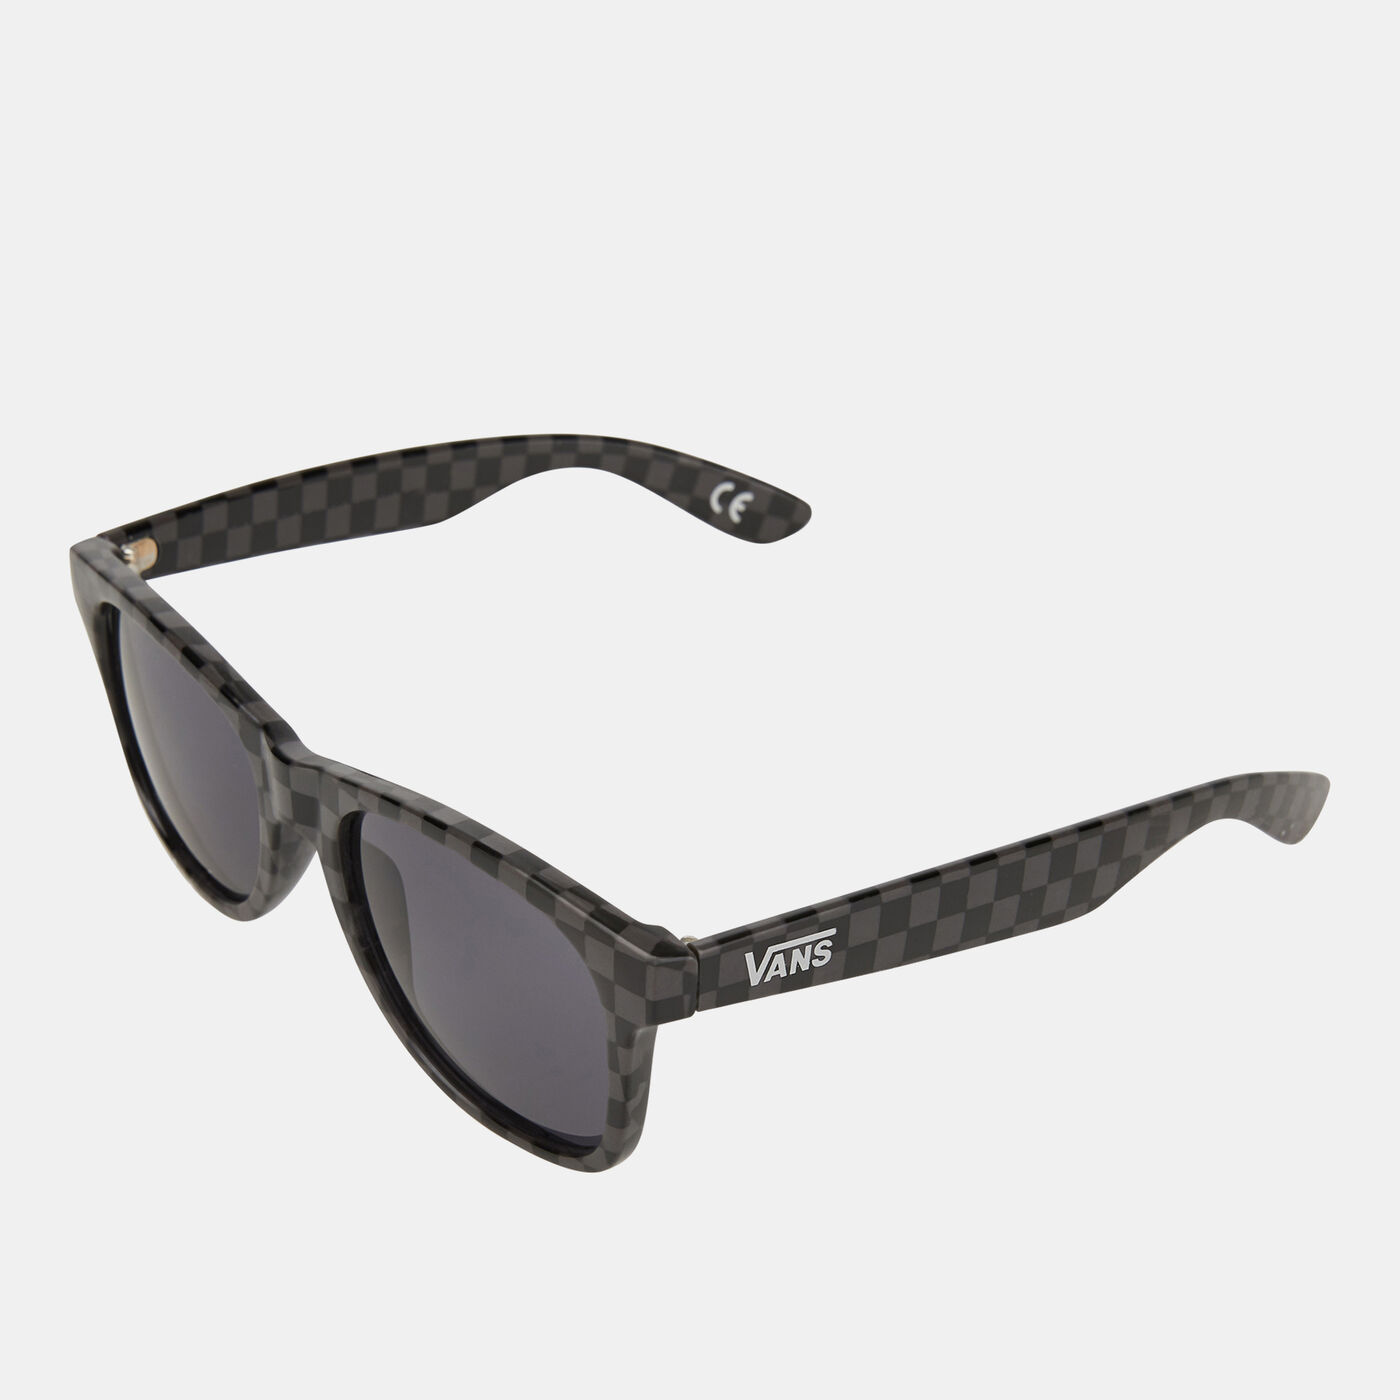 Men's Spicoli 4 Sunglasses